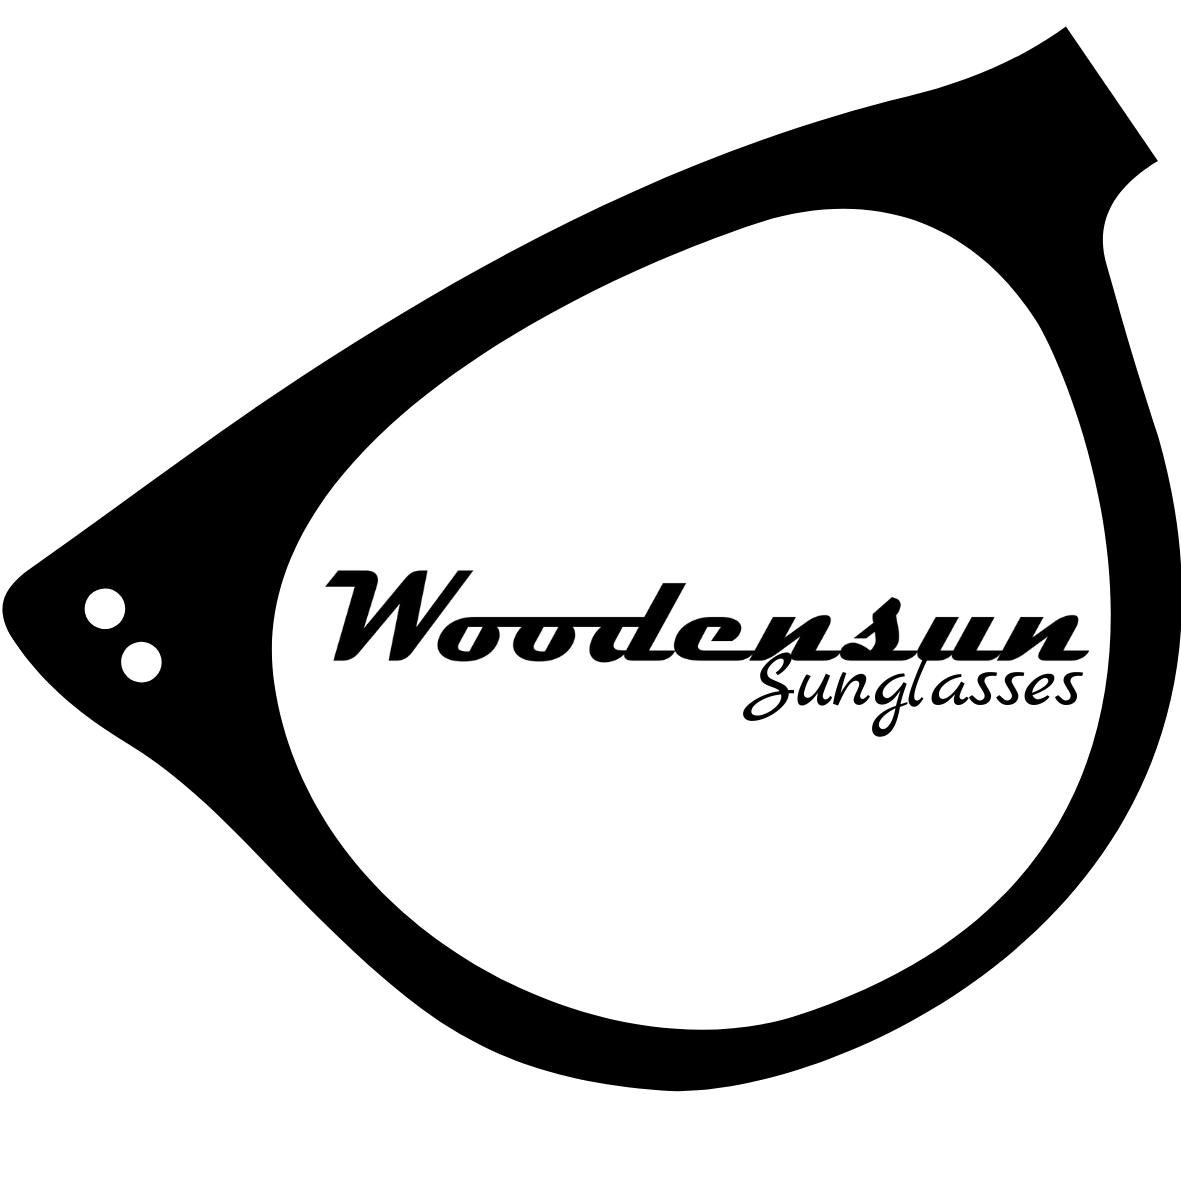 Woodensun Sunglasses